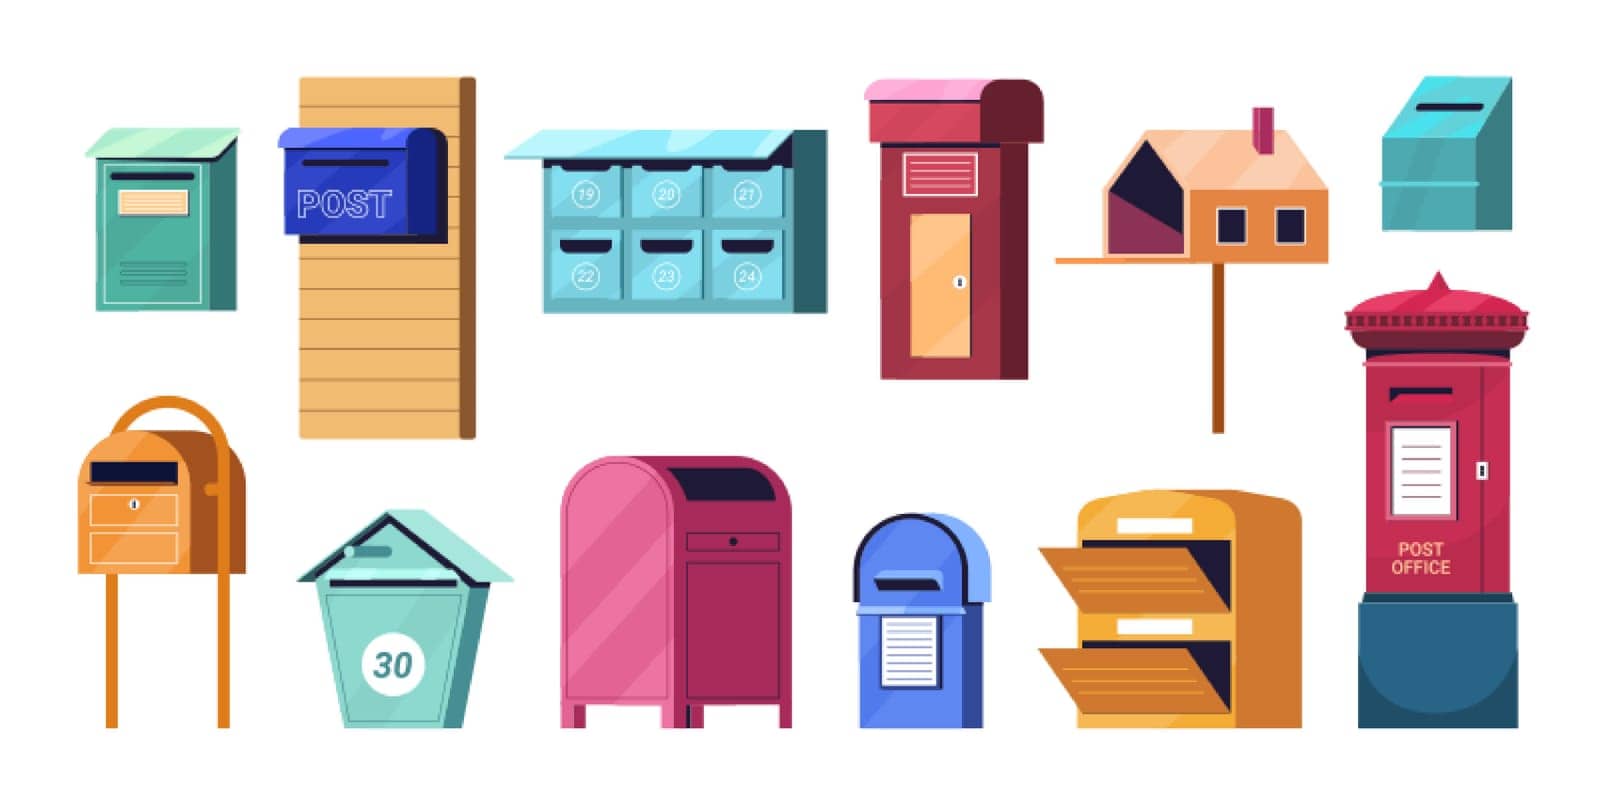 Flat mailbox or post box set. Color letterboxes for correspond letters delivery. Street stainless mail boxes or containers for paper correspondence, postal envelopes vector cartoon illustration.